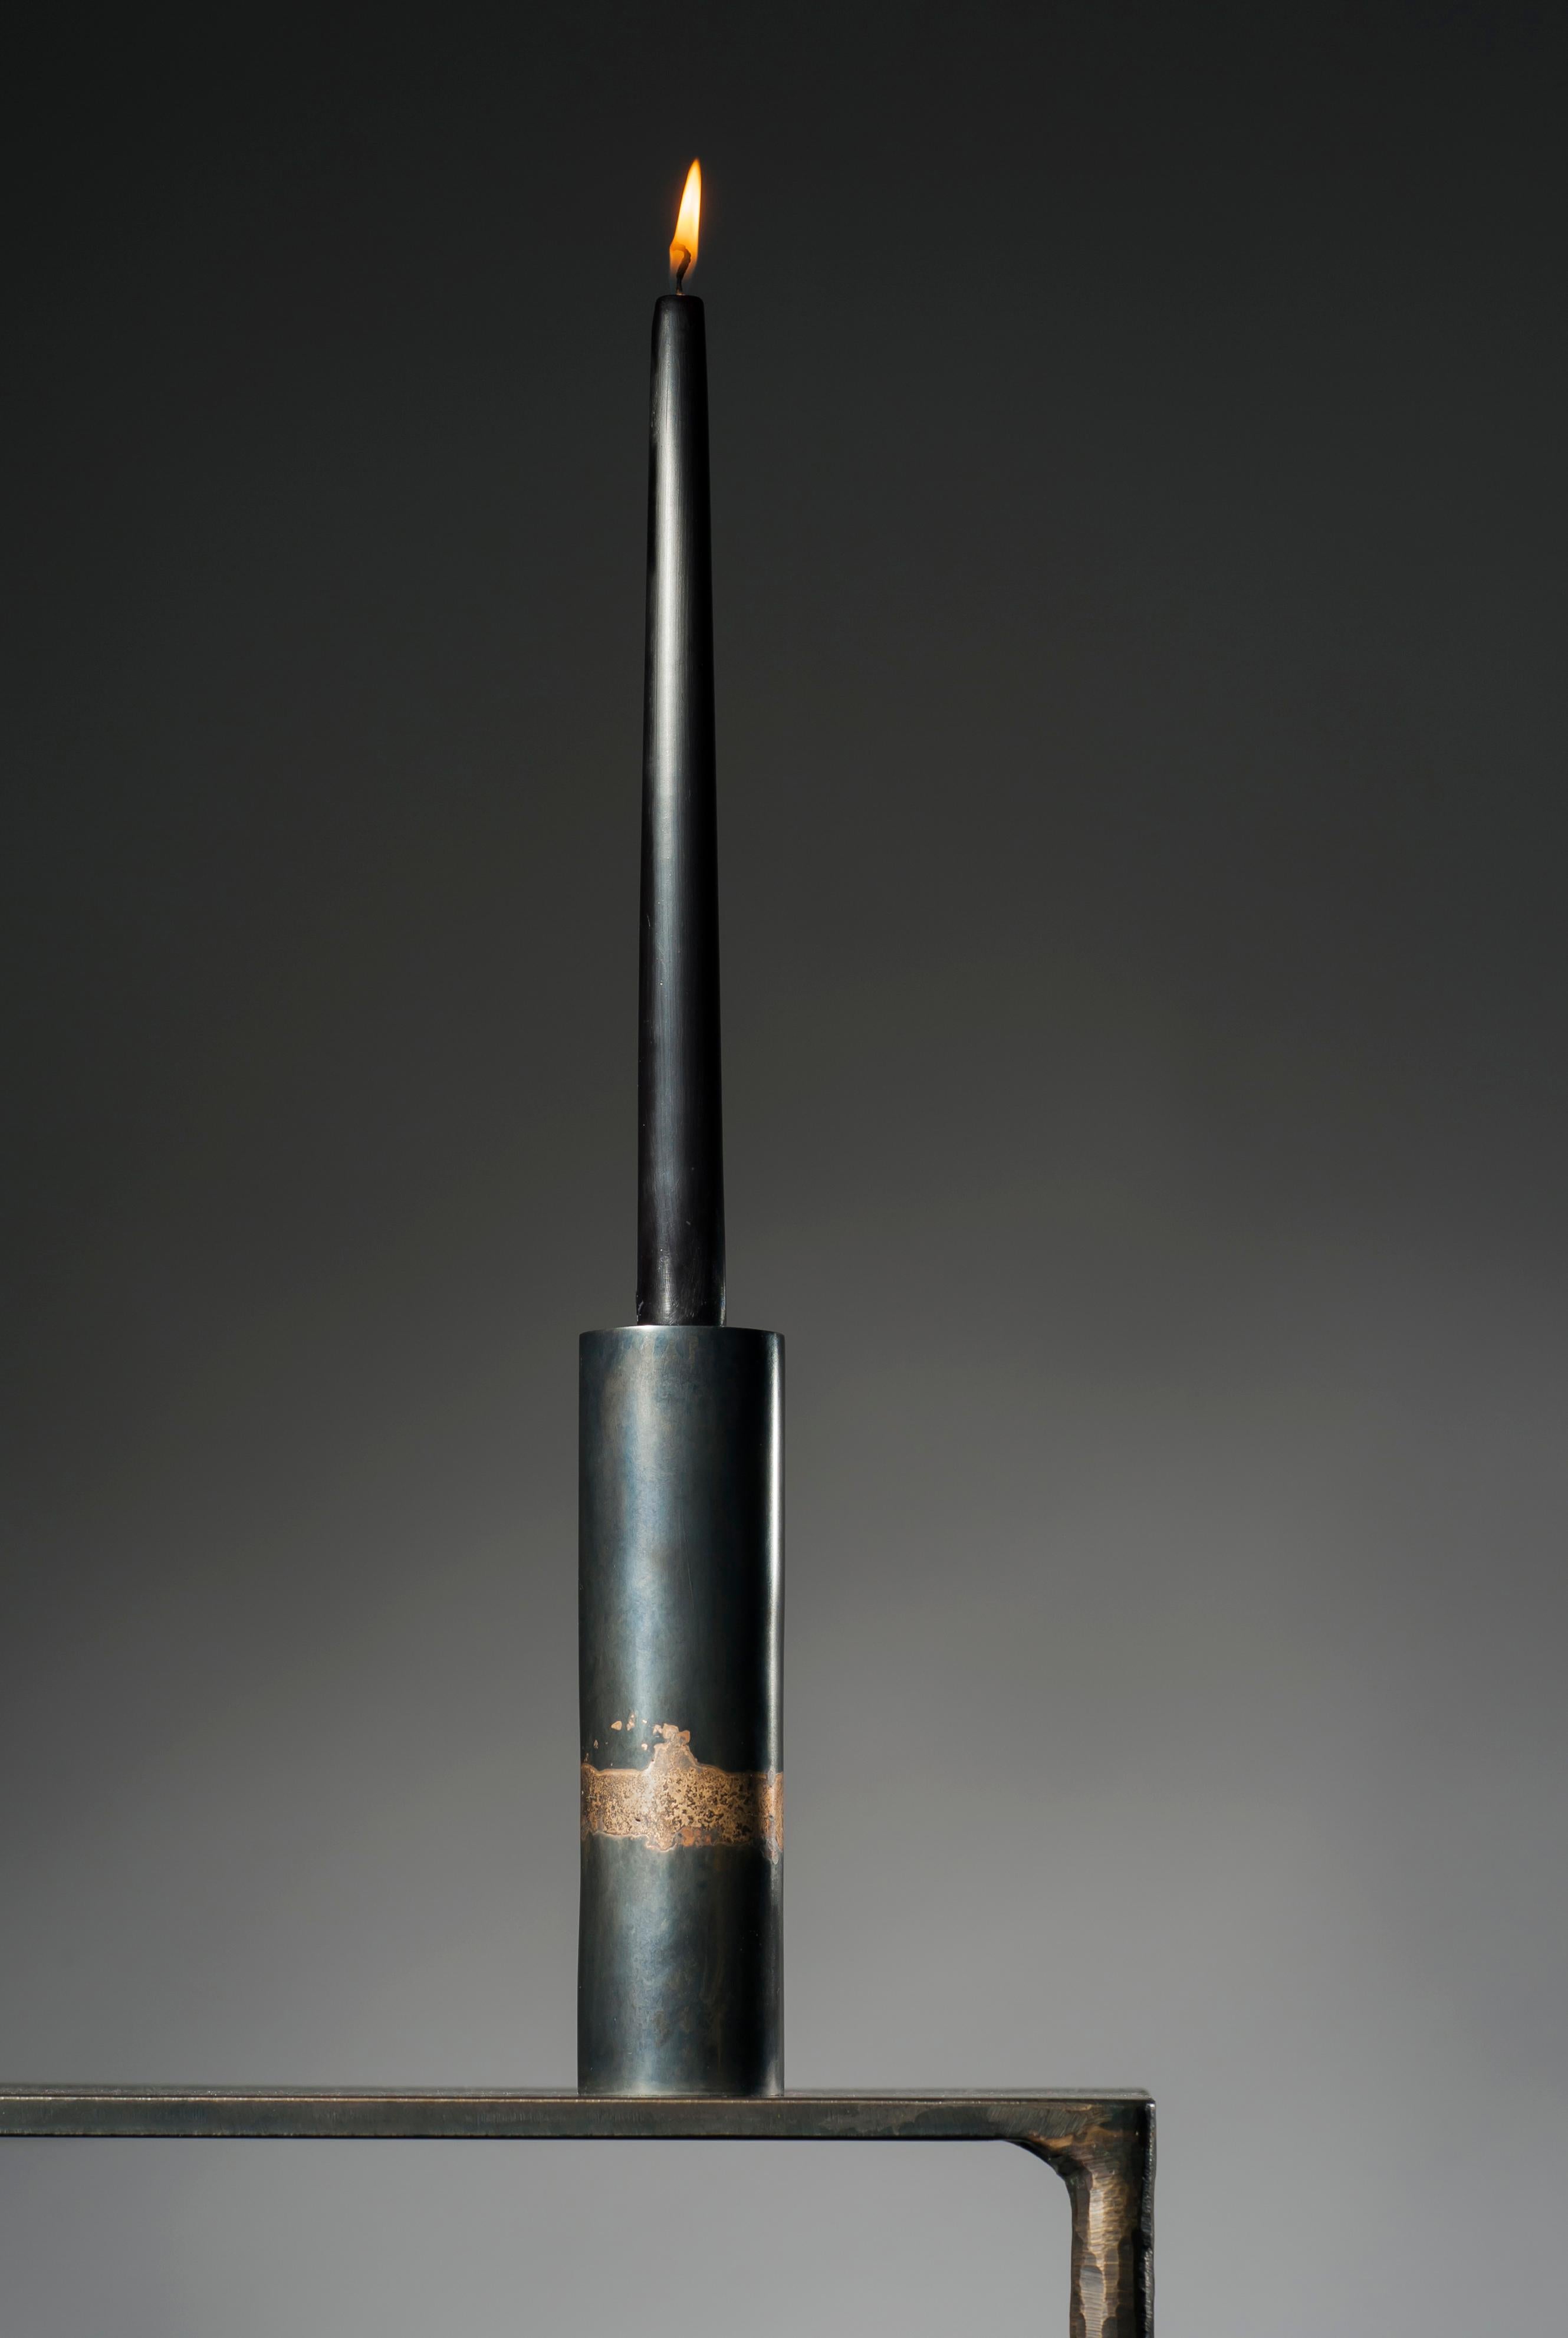 Steel candlestick by Lukasz Friedrich
Dimensions: D 5 x H 18 cm
Materials: Black patina on steel, bronze detail.